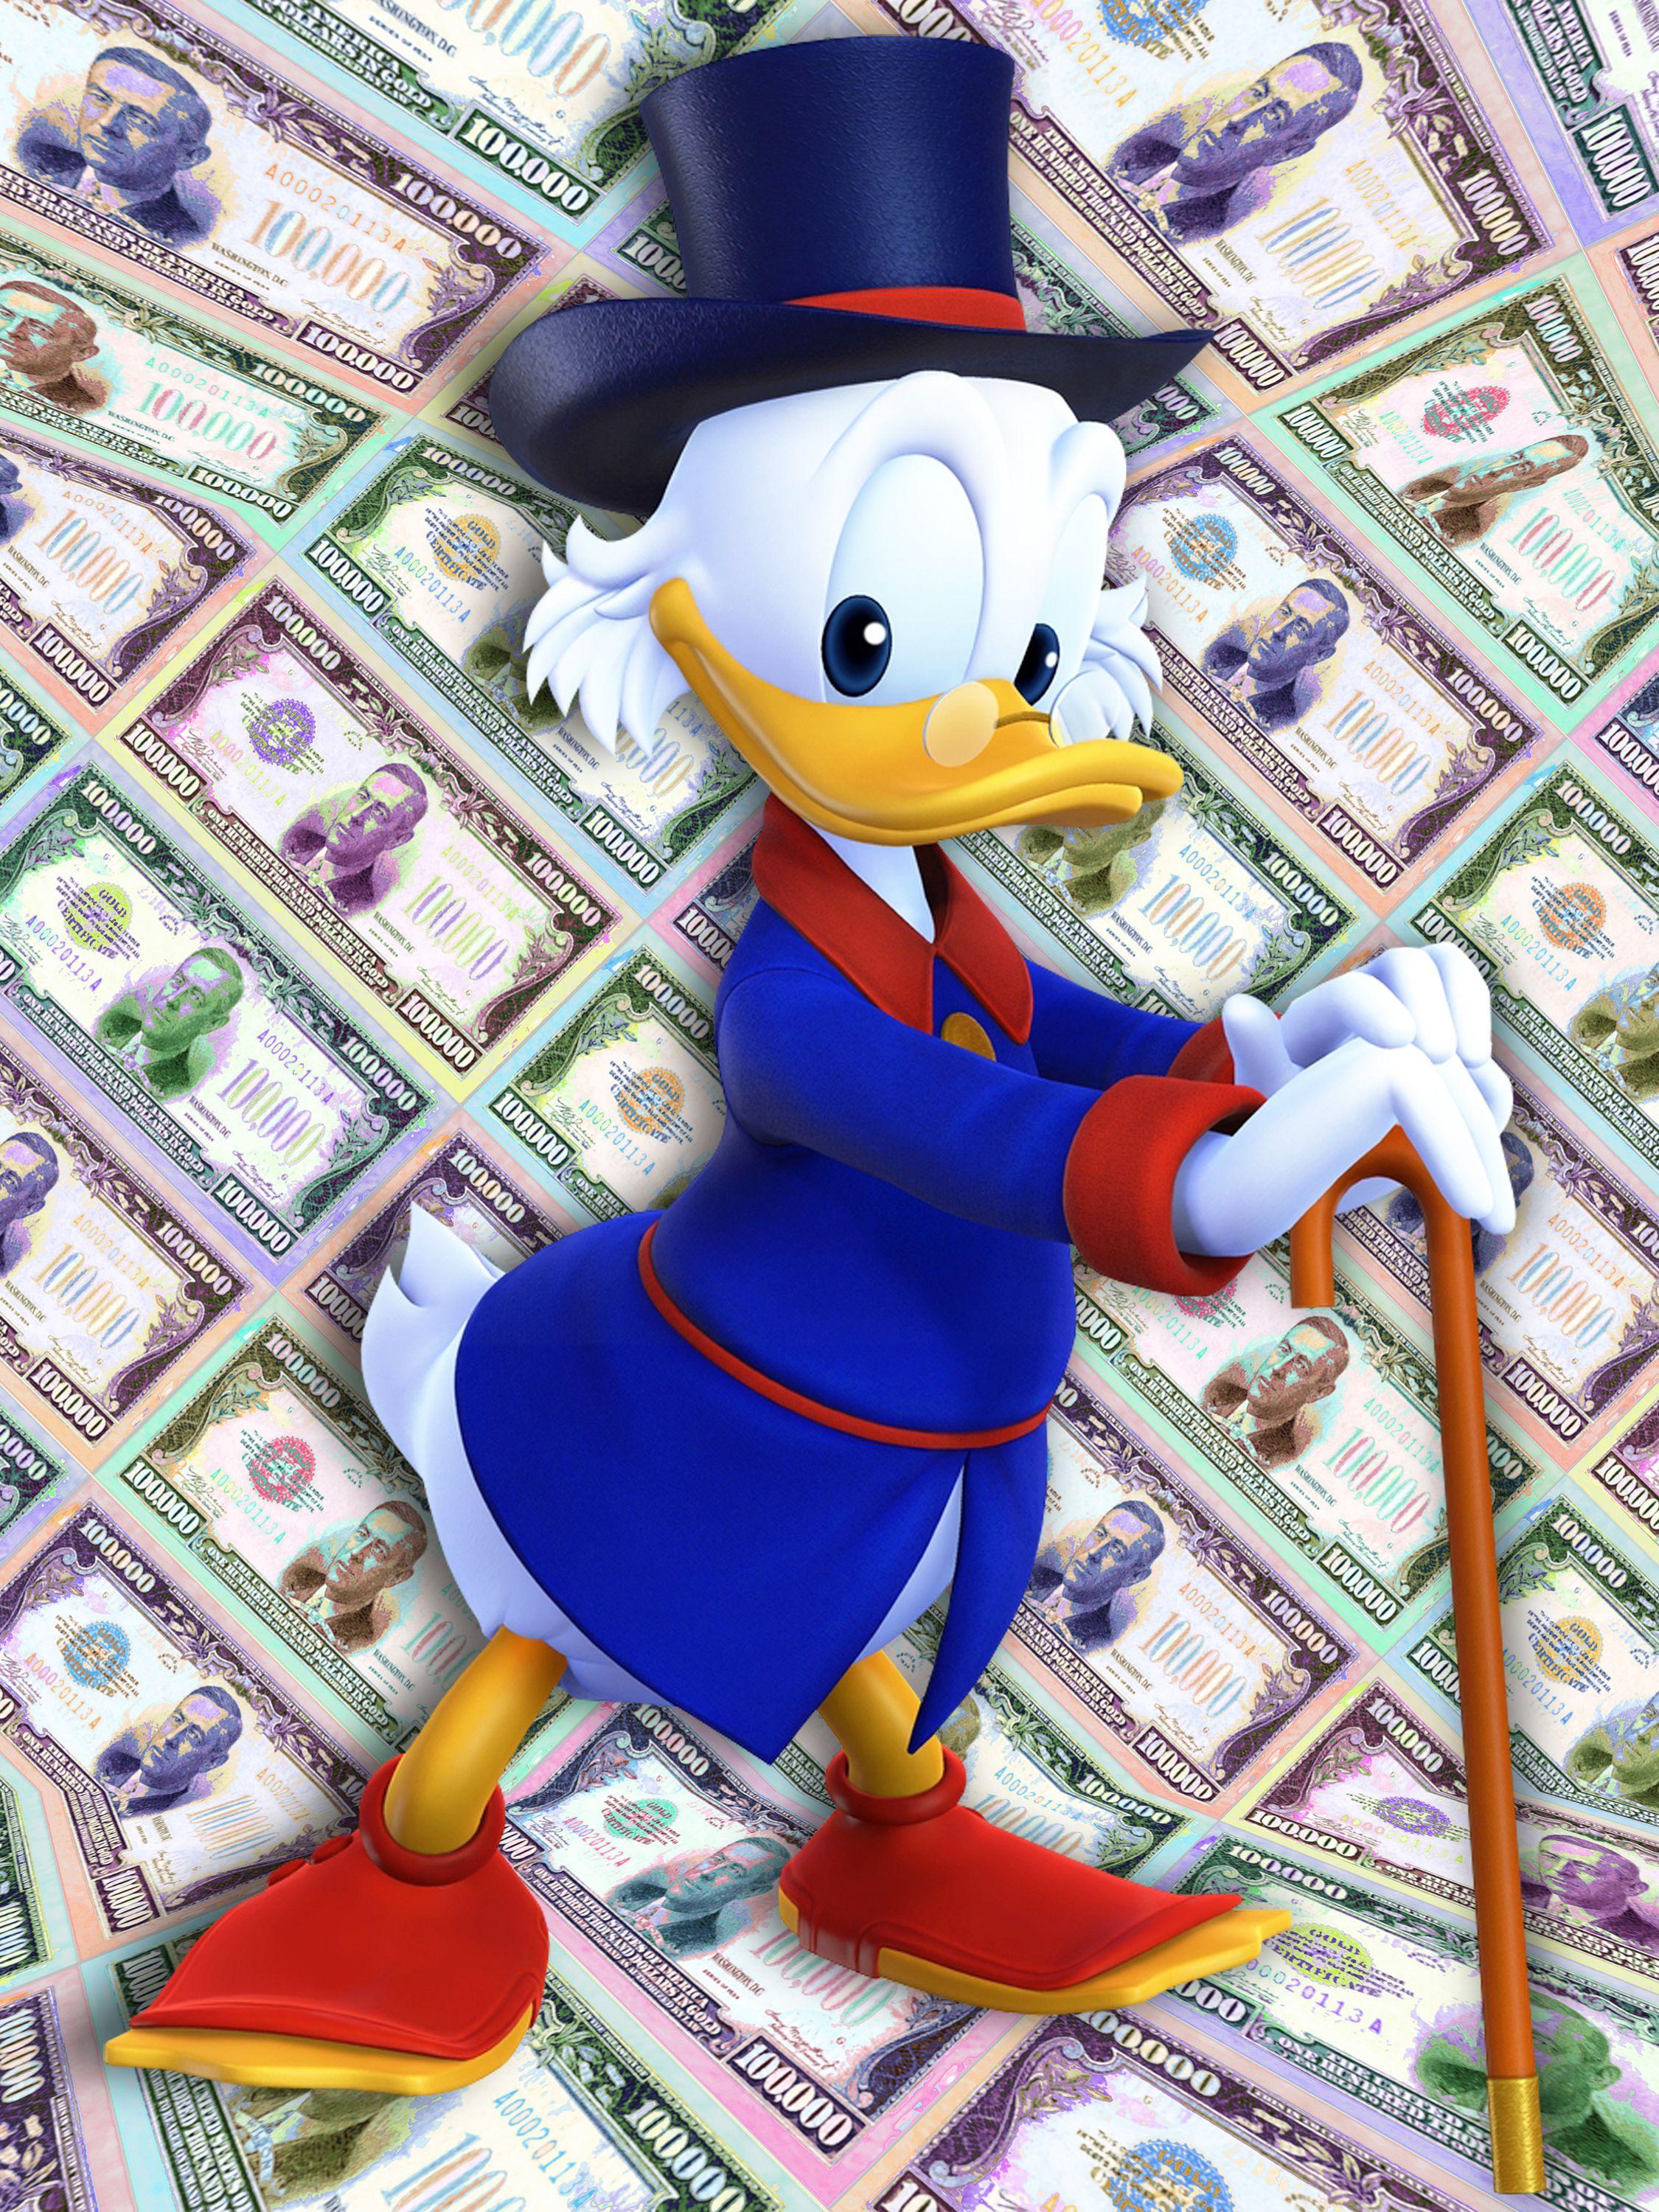 Scrooge McDuck Money Gangsta Rich Cash Bills Pop 1, Mixed Media on Canvas - Mixed Media Art by Tony Rubino